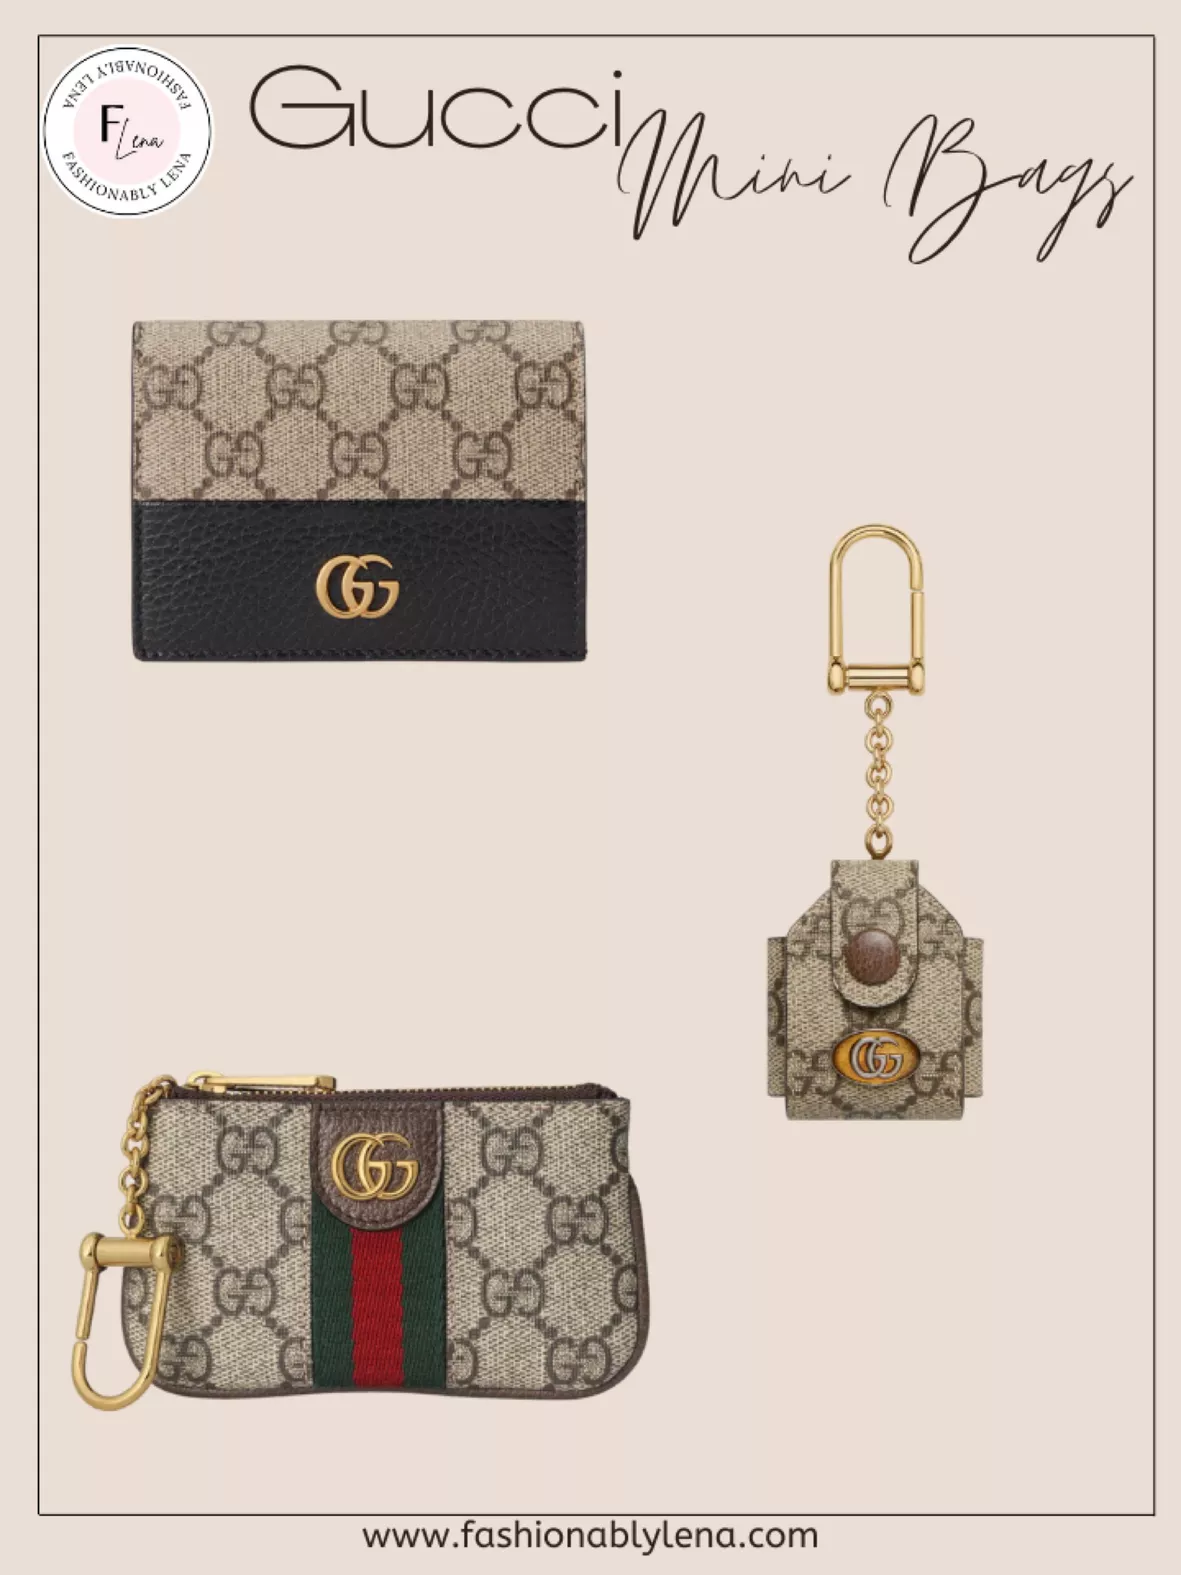 fashionablylena's Chanel Sets Gift Guide on LTK